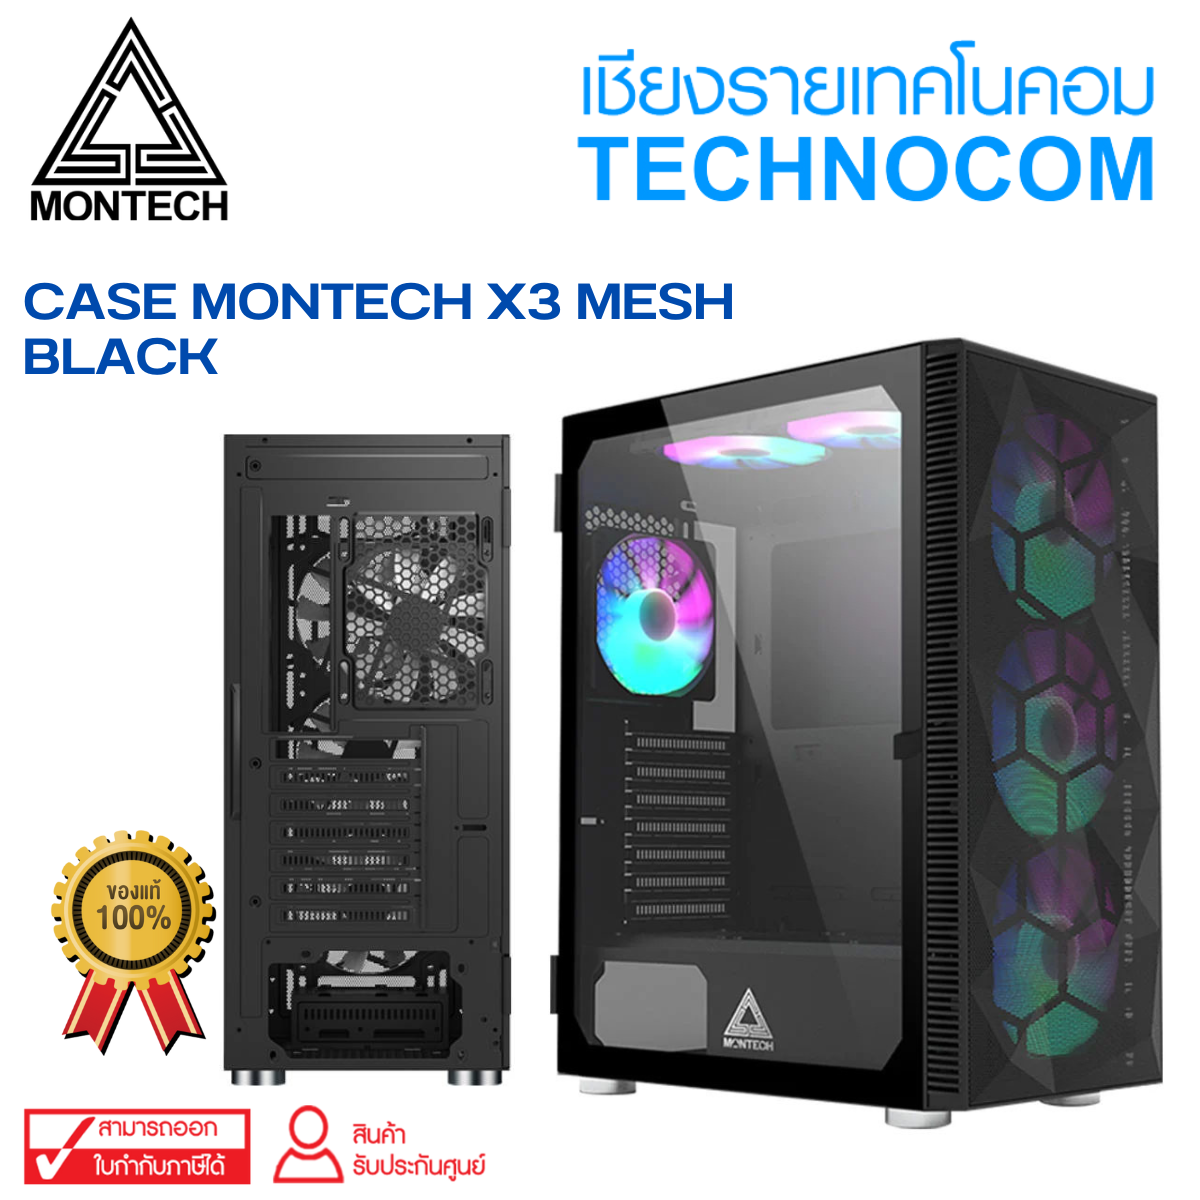 CASE MONTECH X3 MESH BLACK